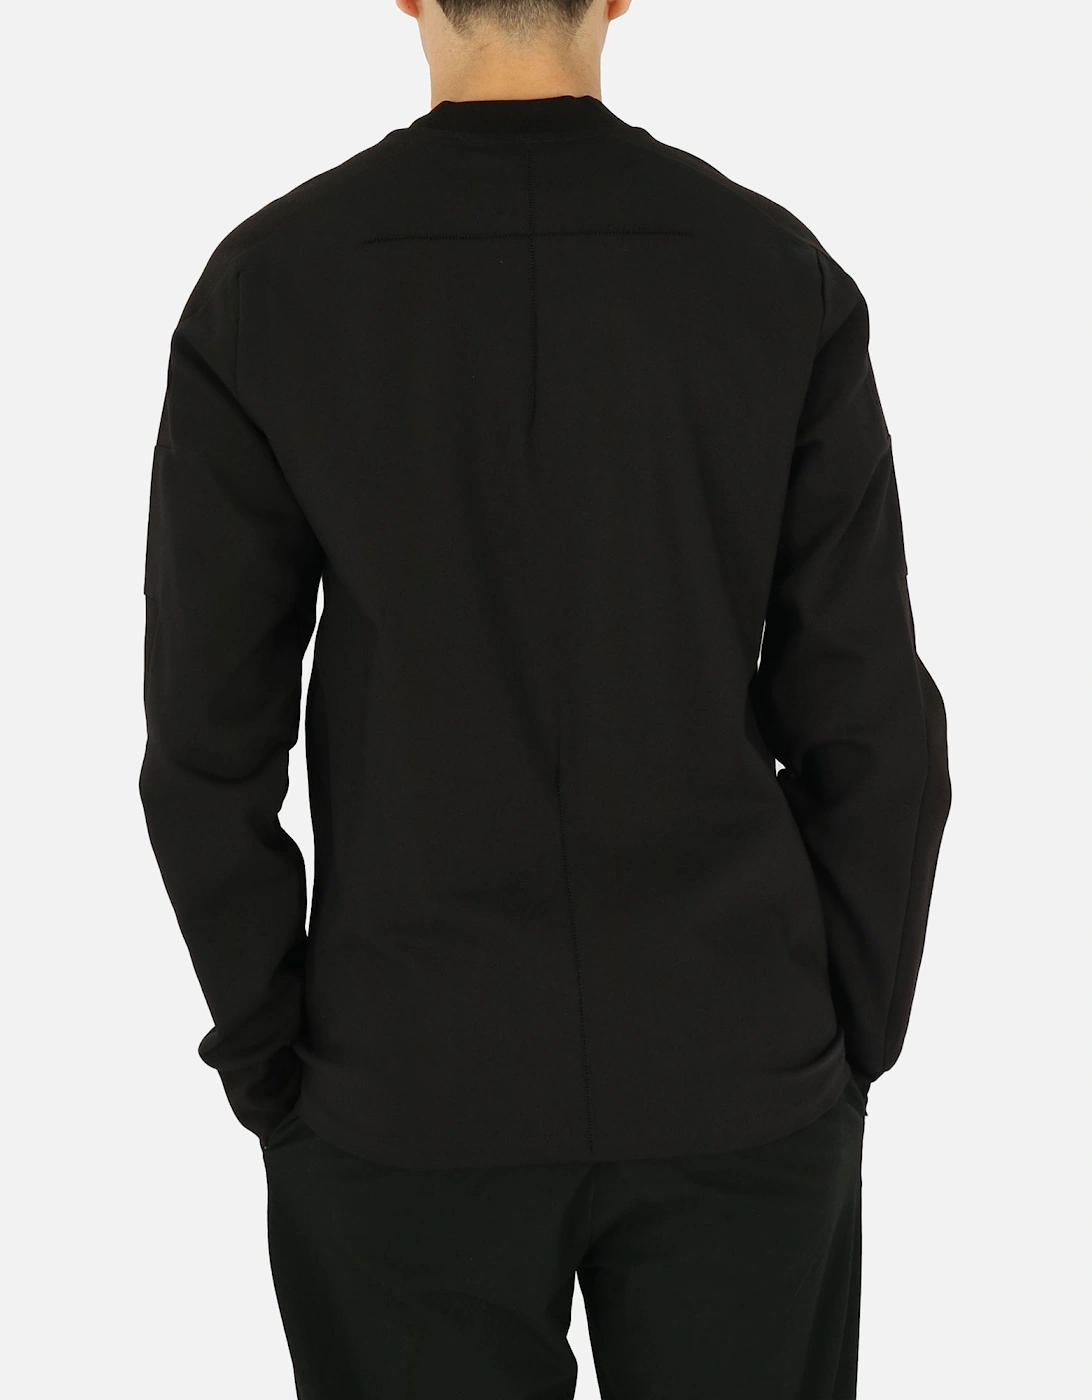 Zip Nero Black Shirt Jacket